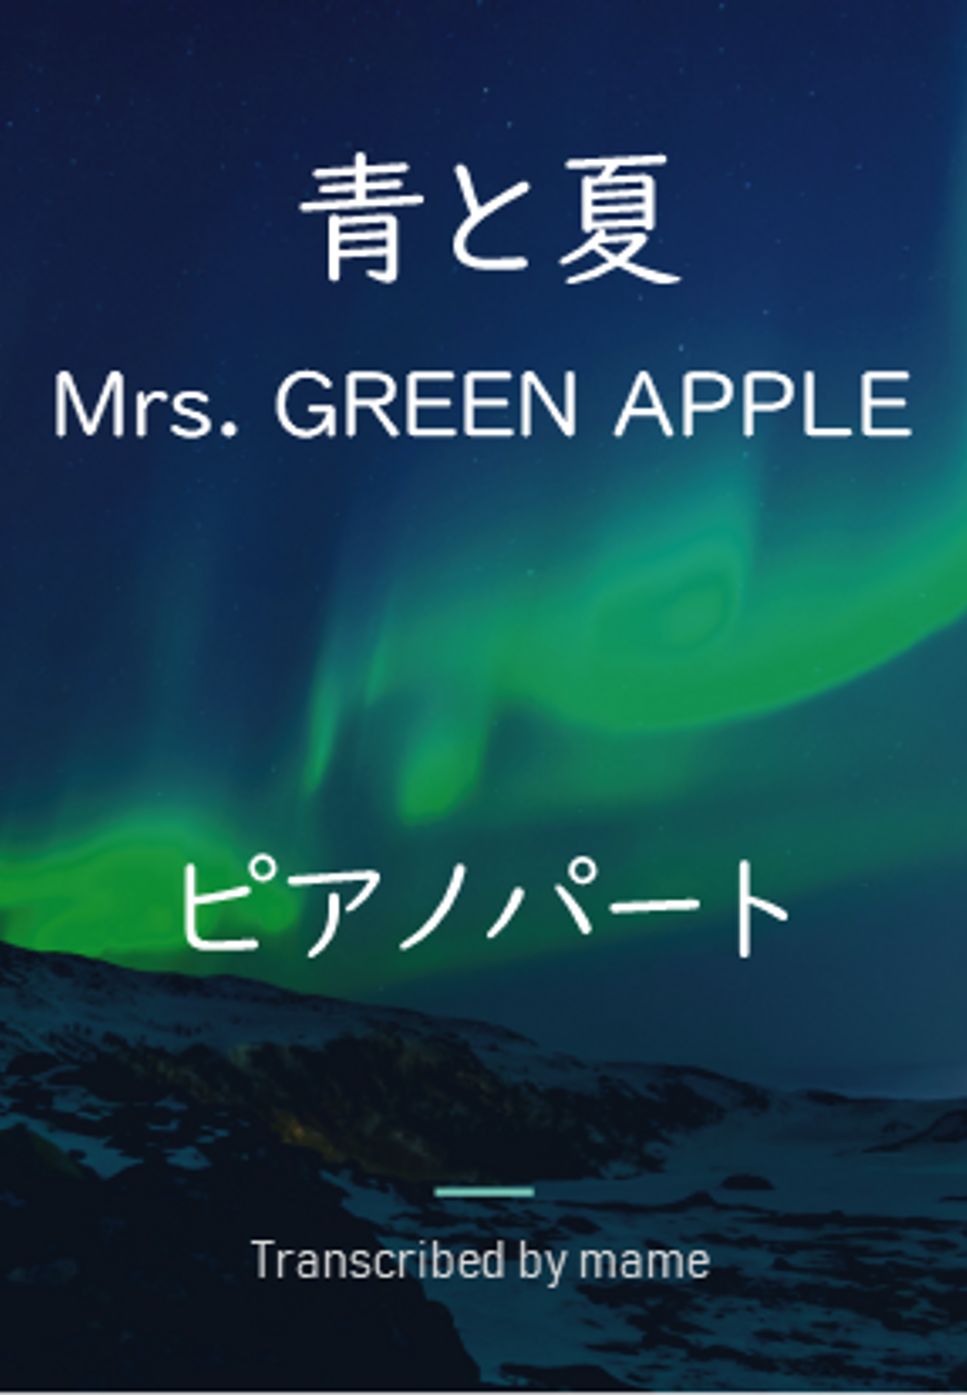 Mrs. GREEN APPLE - 青と夏 ao to natsu (piano part) by mame